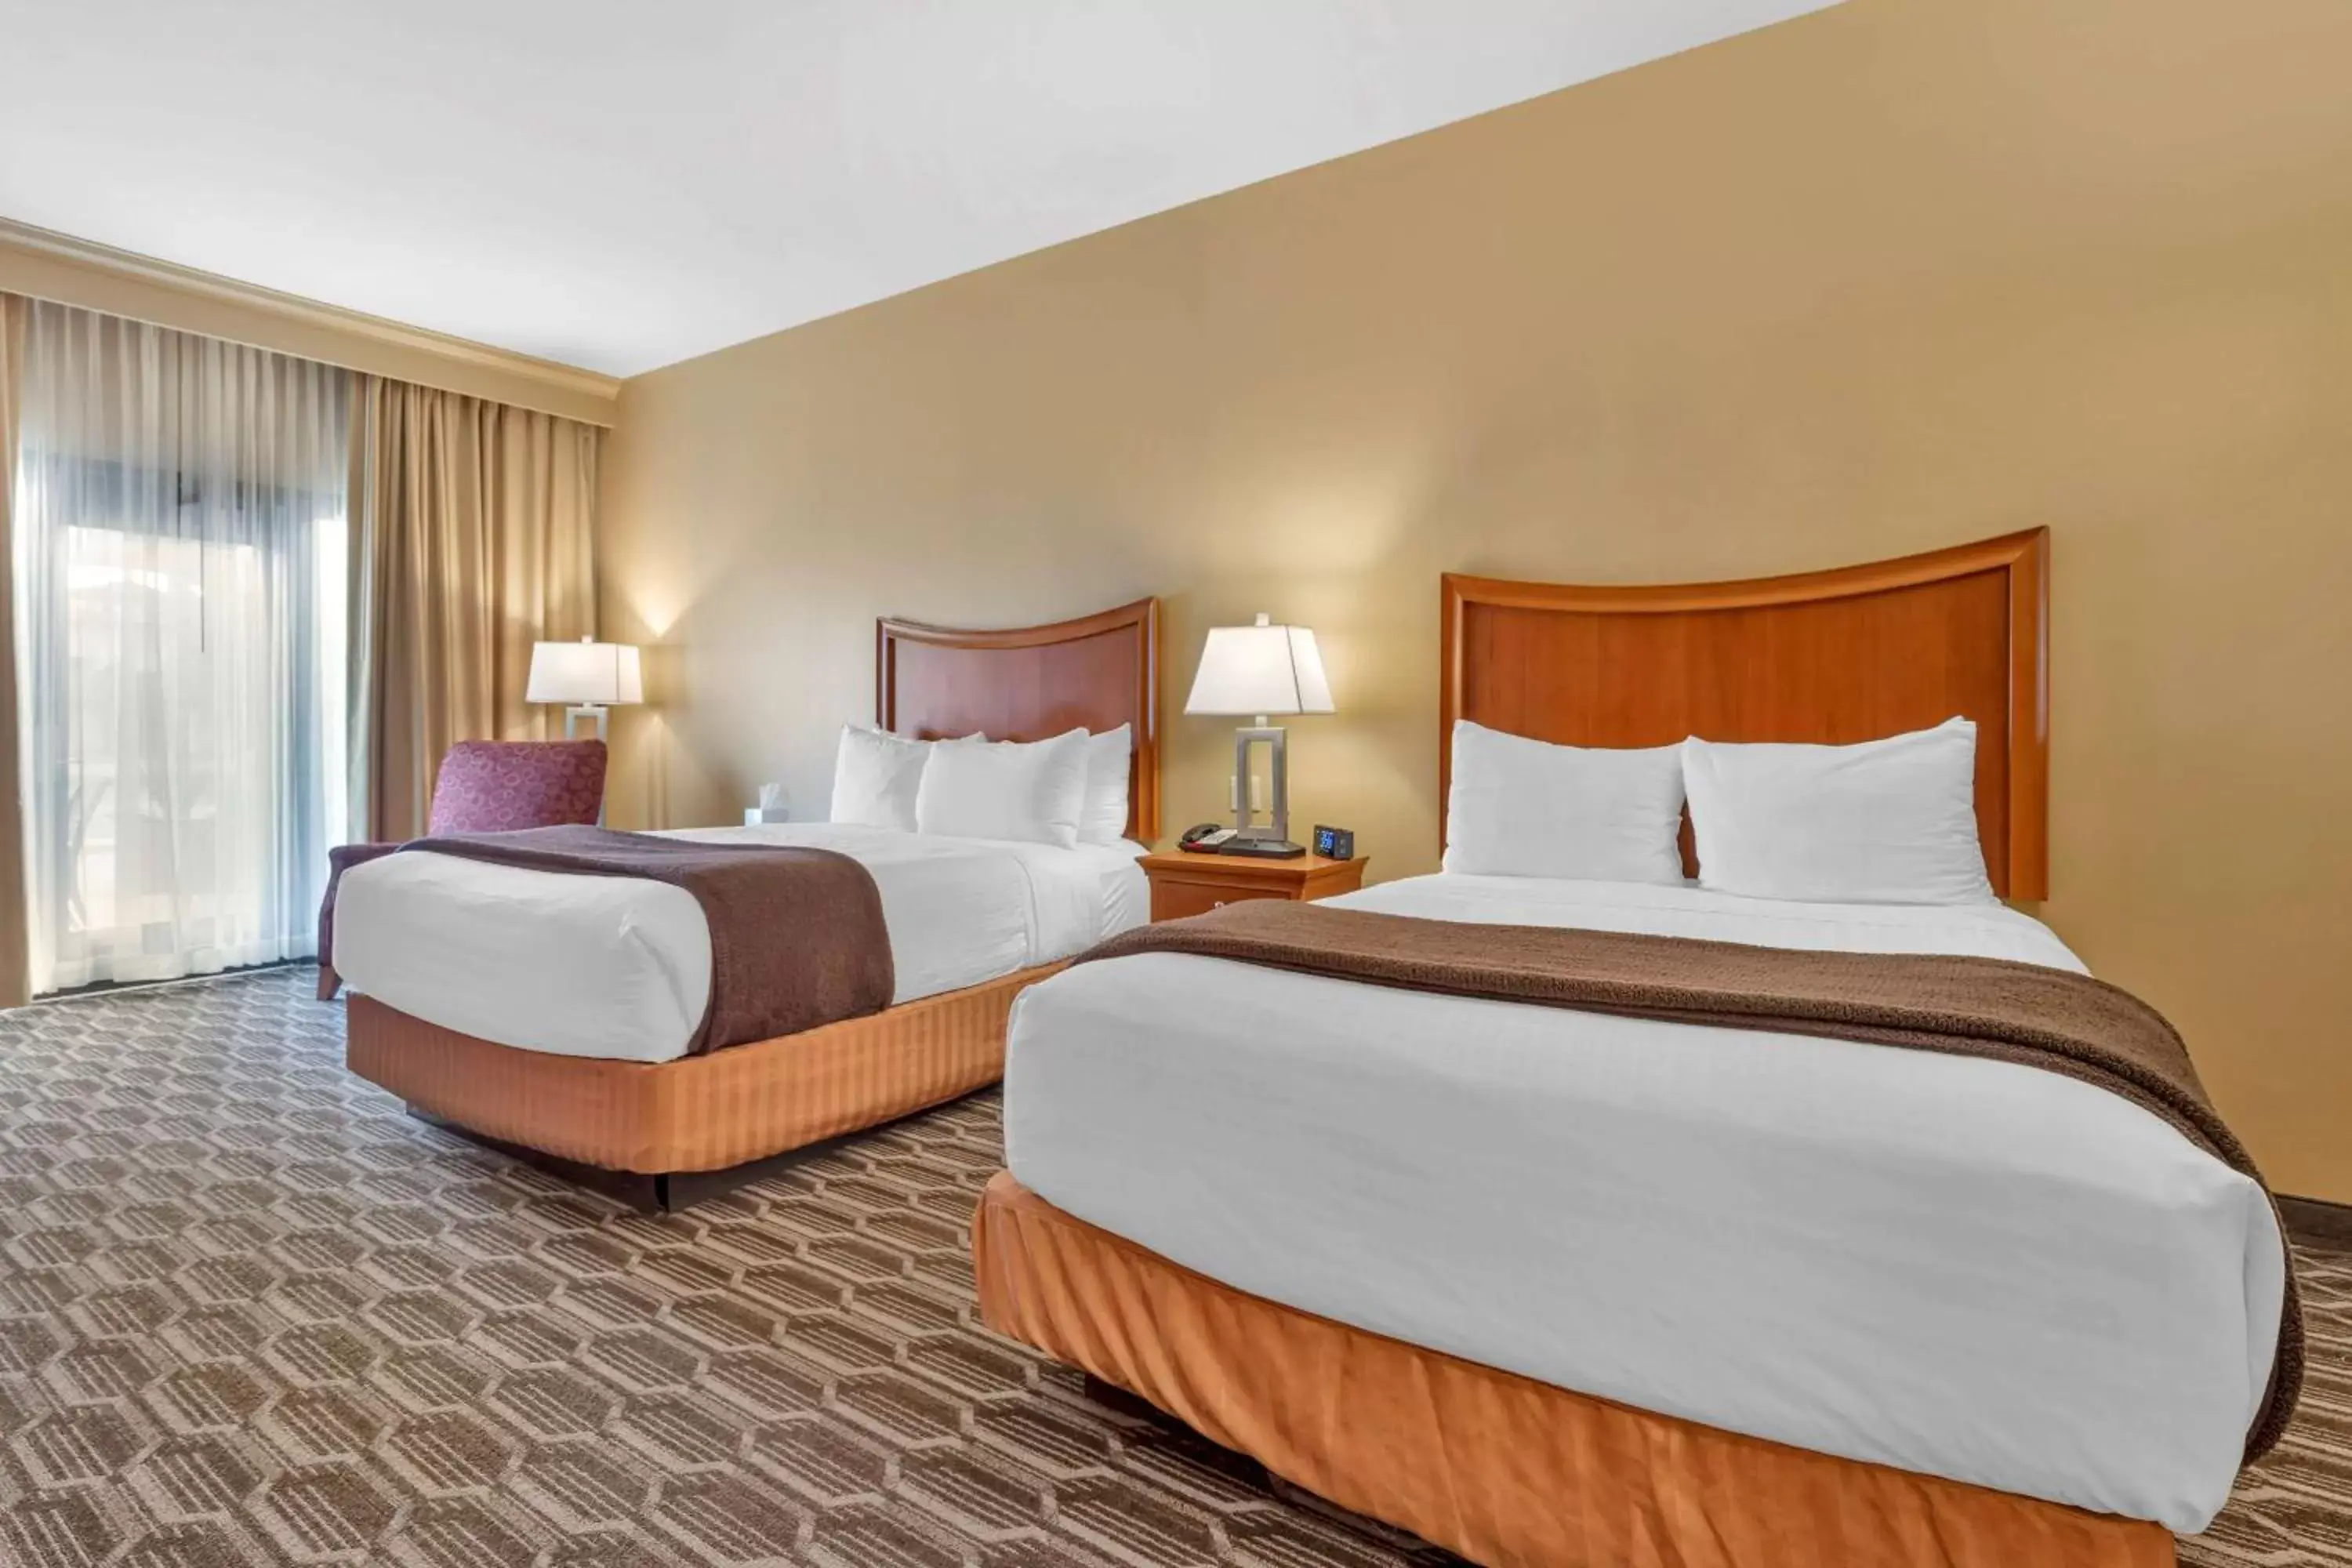 Bedroom, Bed in Best Western Plus Swiss Chalet Hotel & Suites